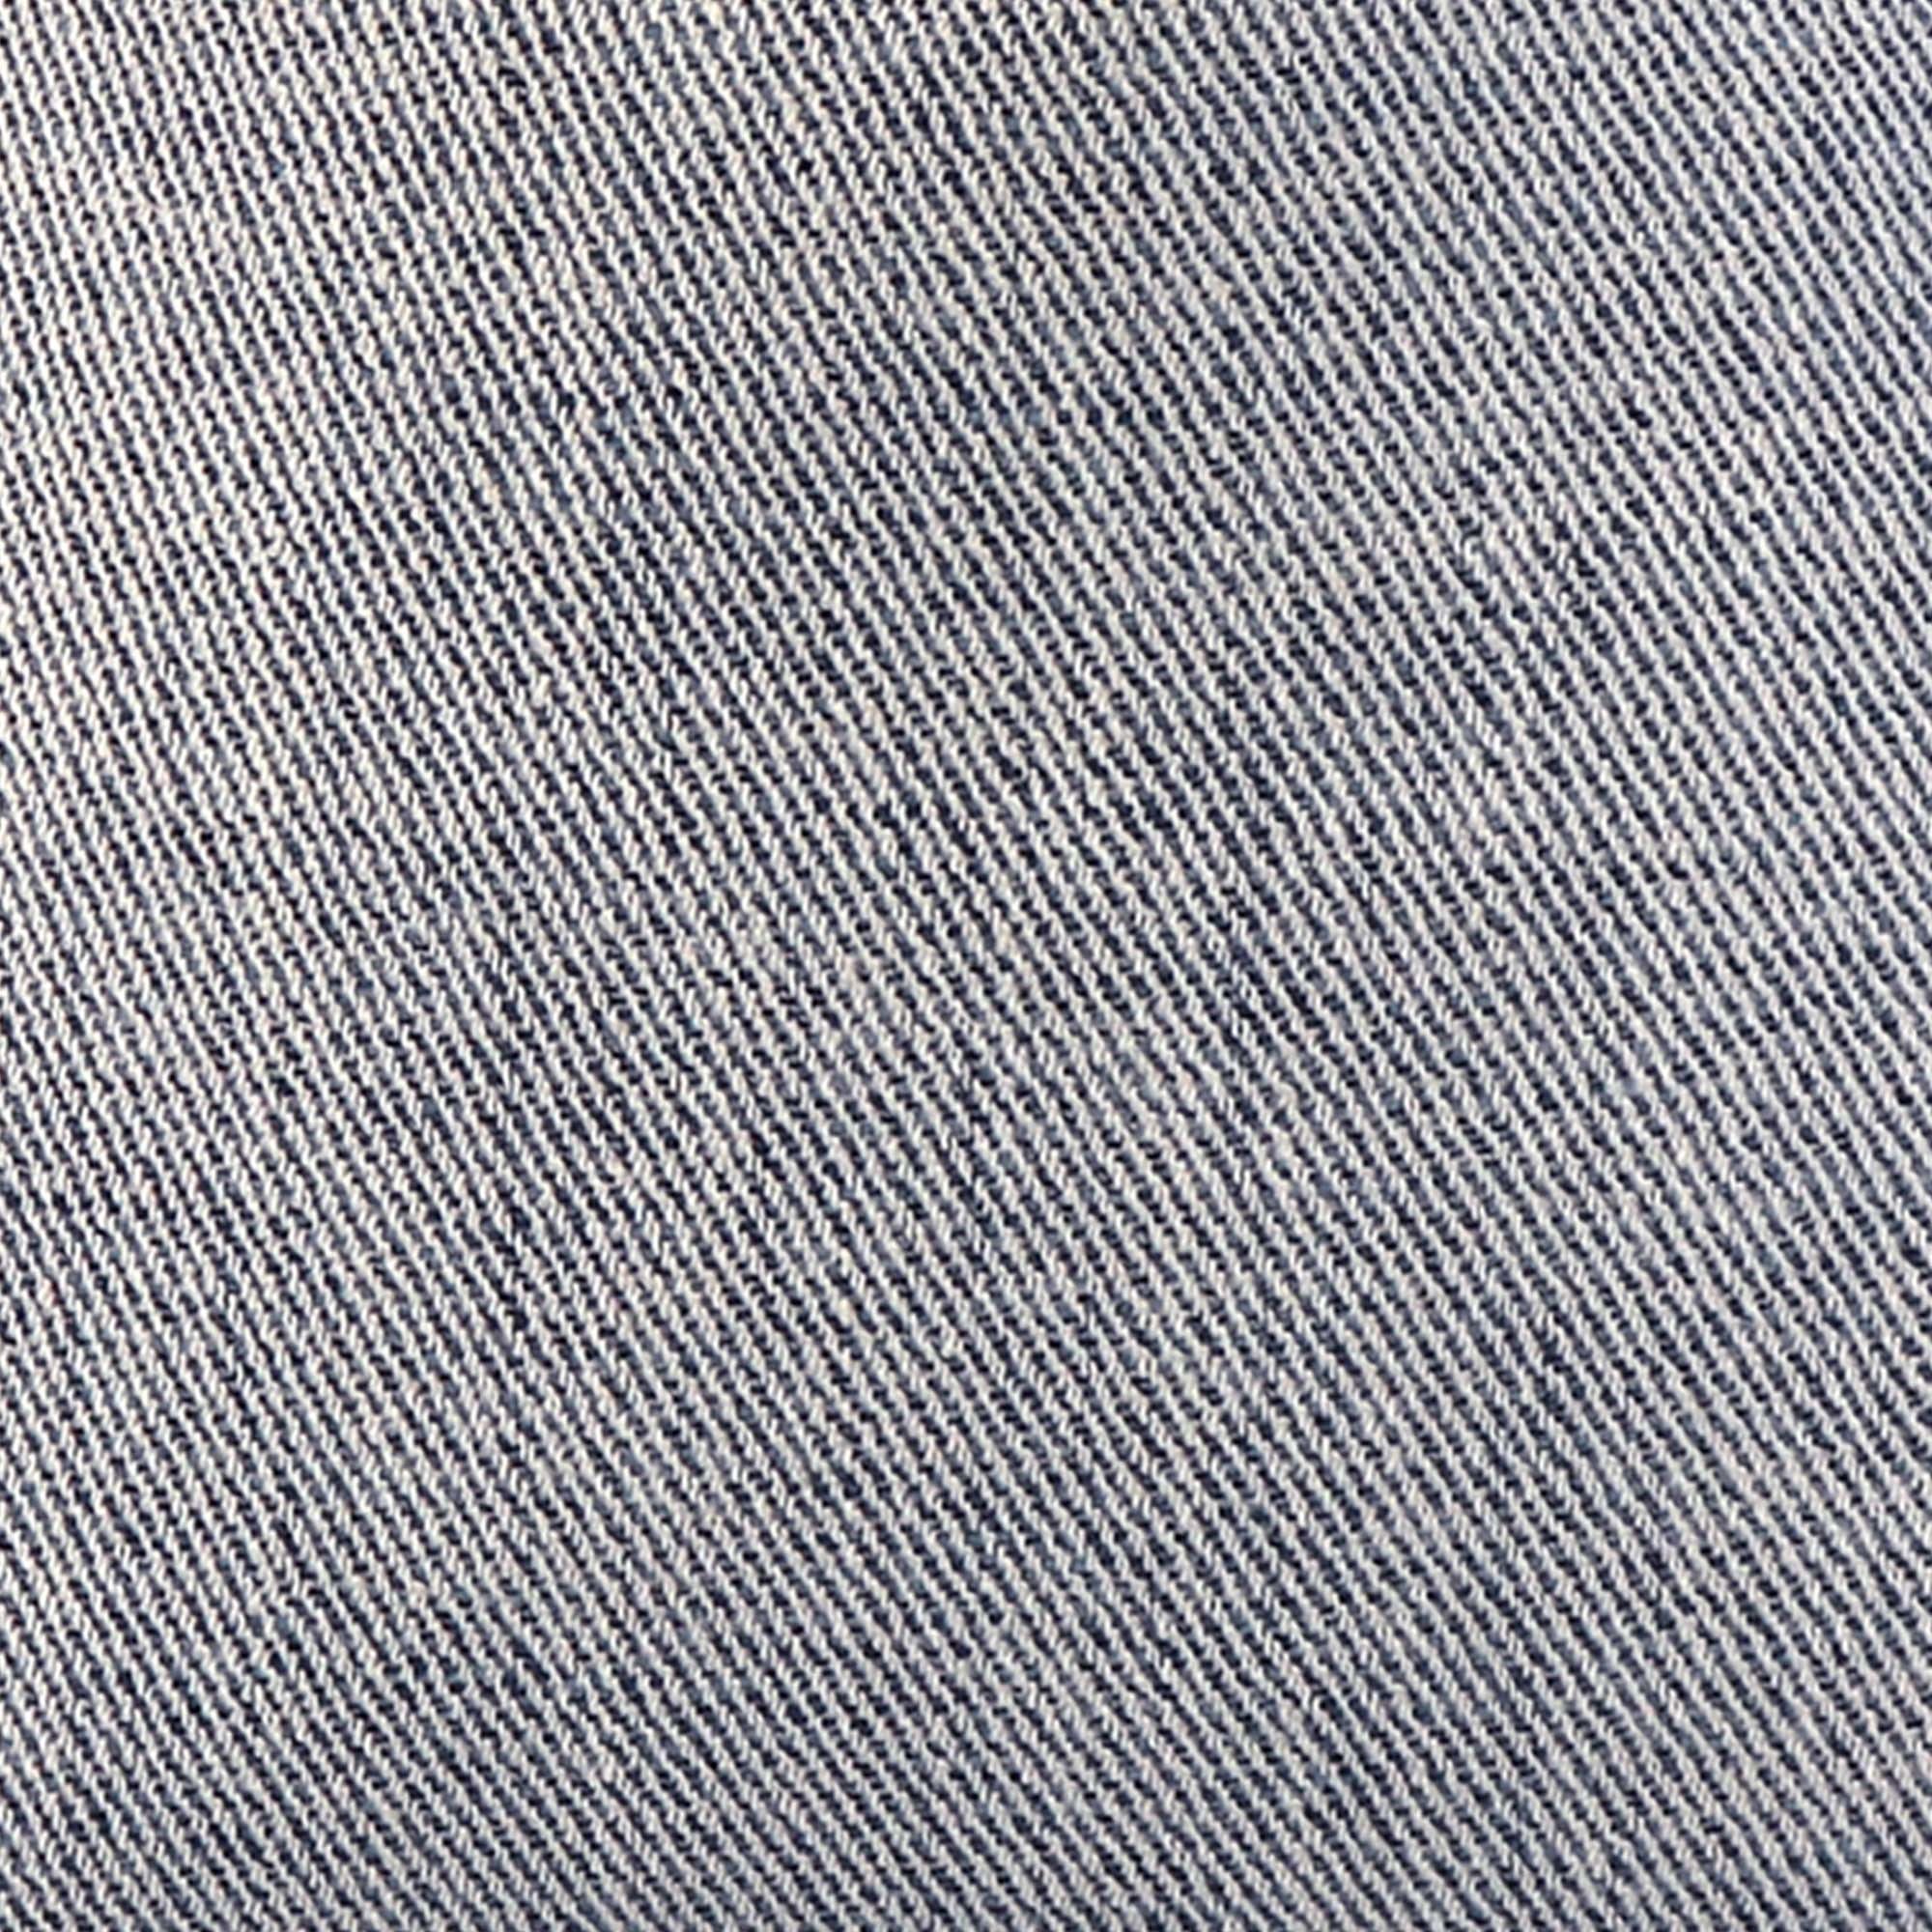 Everett Performance Twill Denim / 4x4 inch Fabric Swatch